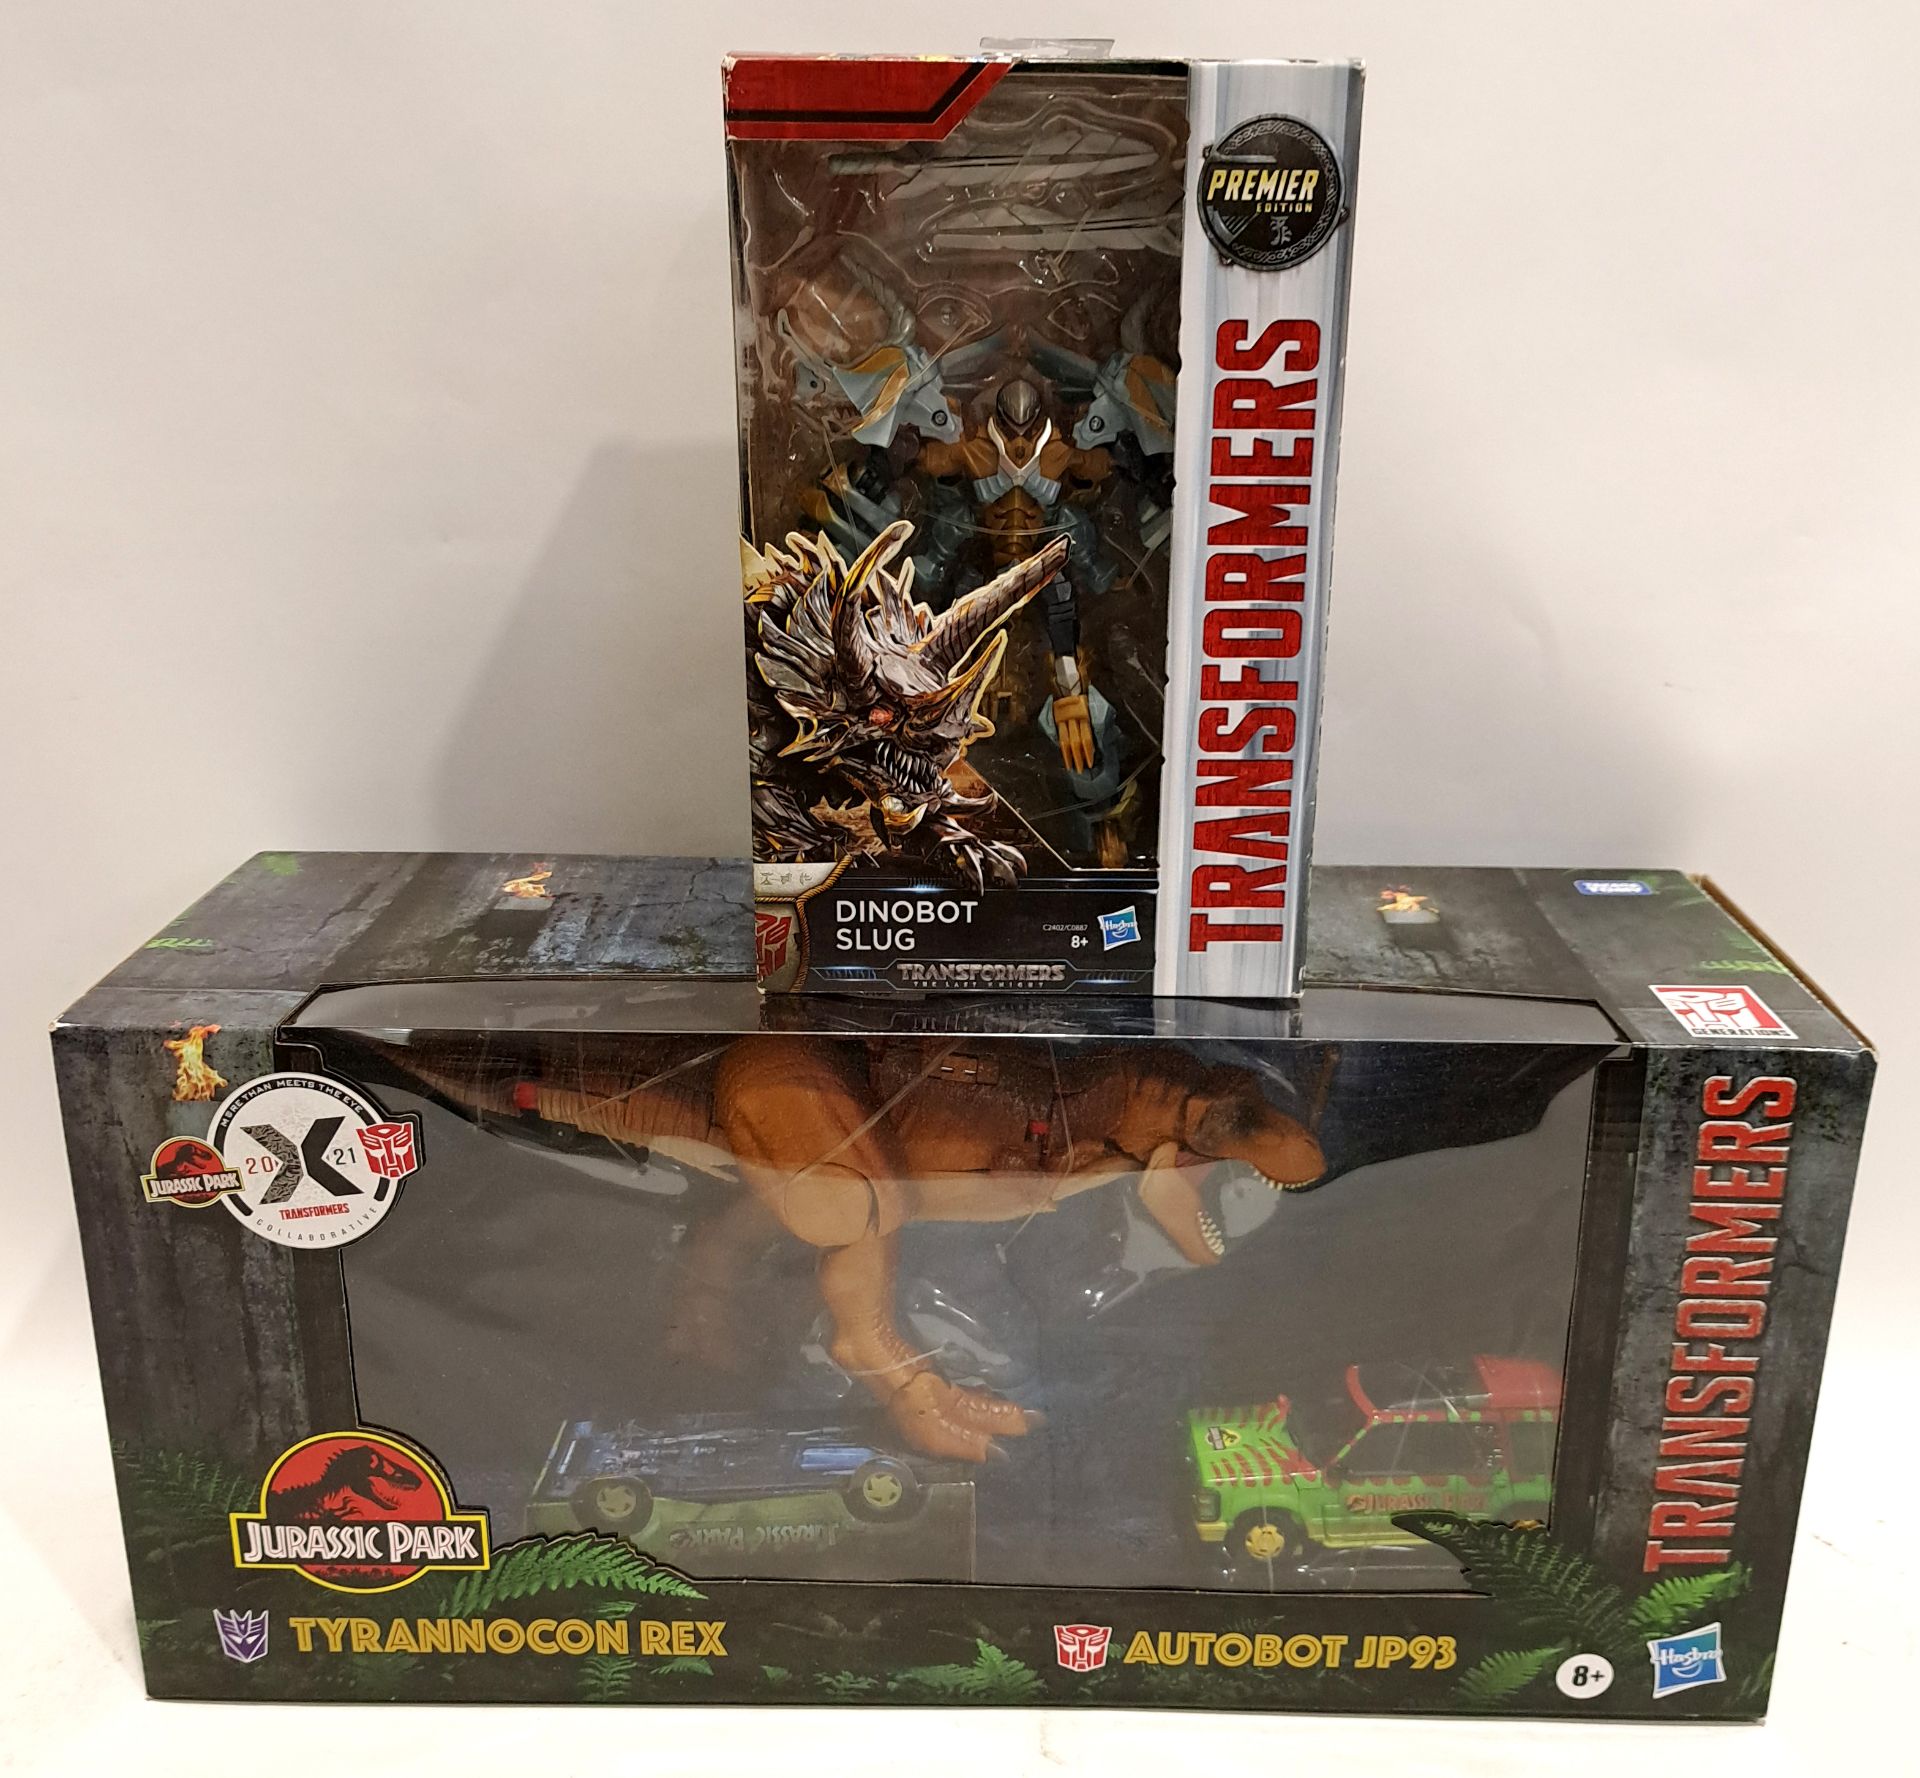 Hasbro Transformers Jurassic Park Crossover Figures & Dinobot Slug Figure